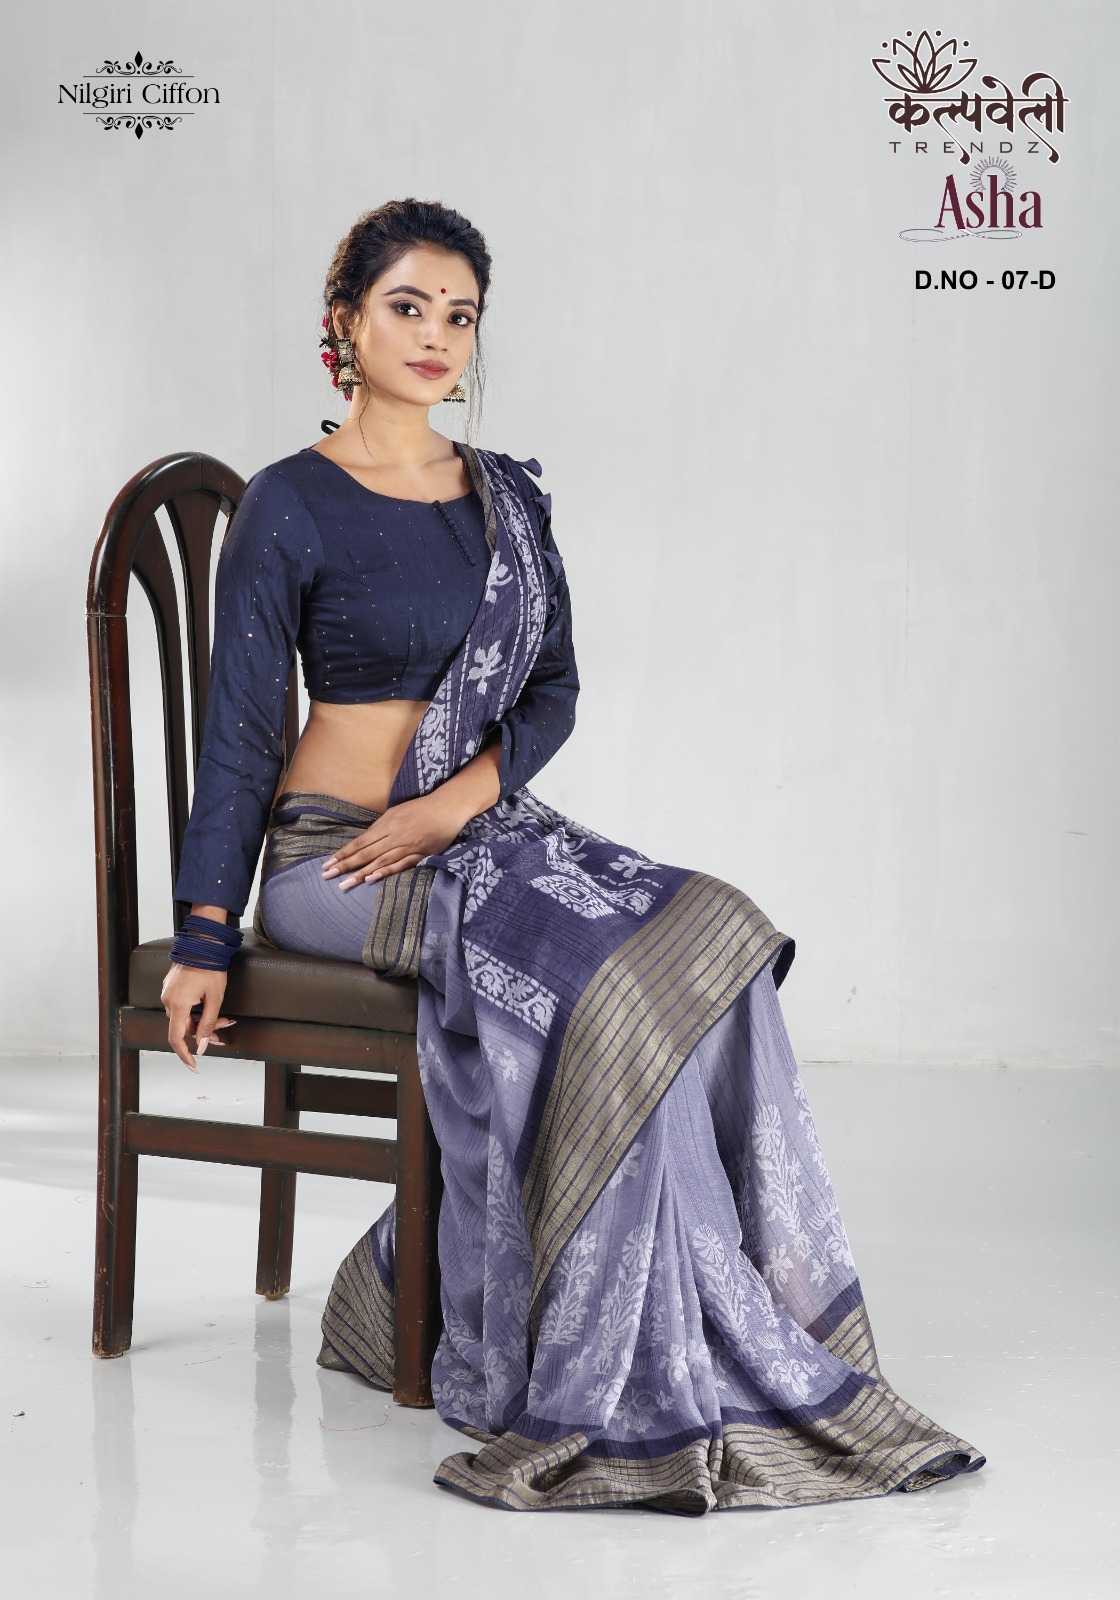 kalpavelly trendz asha 7 traditional sarees supplier